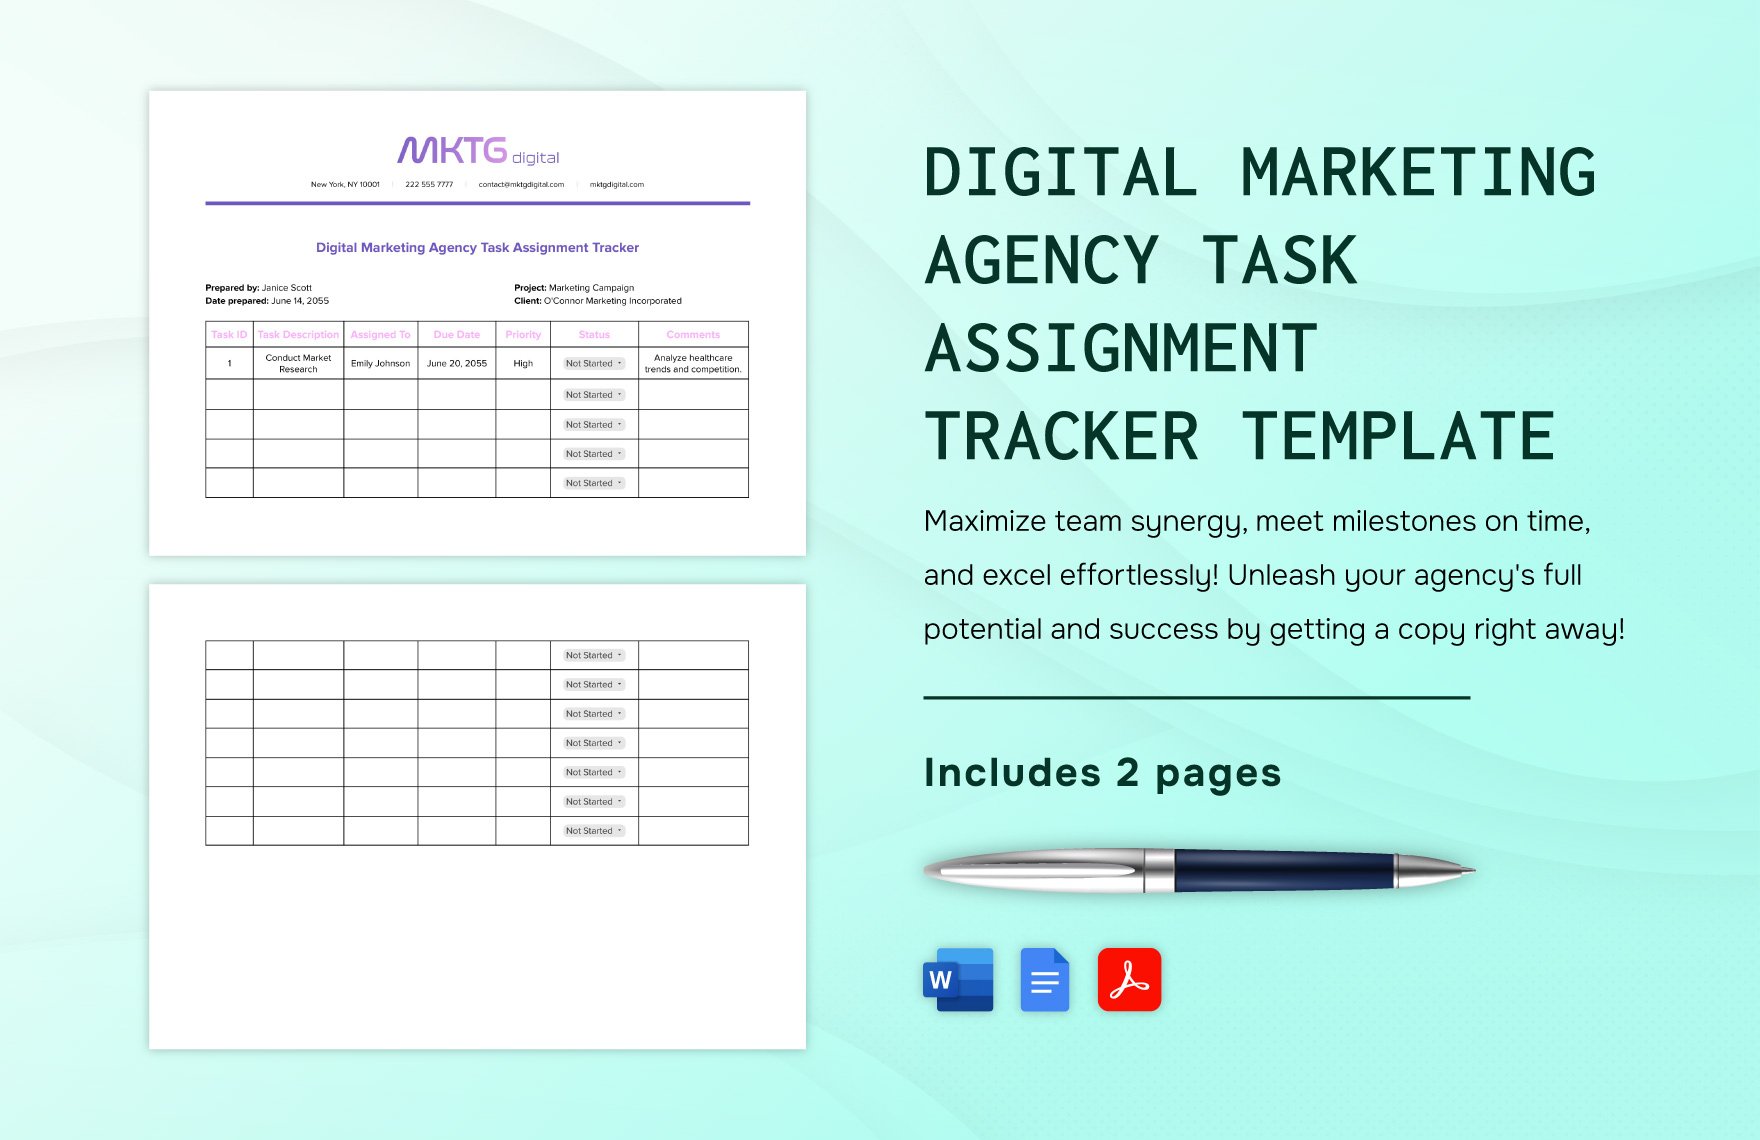 Digital Marketing Agency Task Assignment Tracker Template